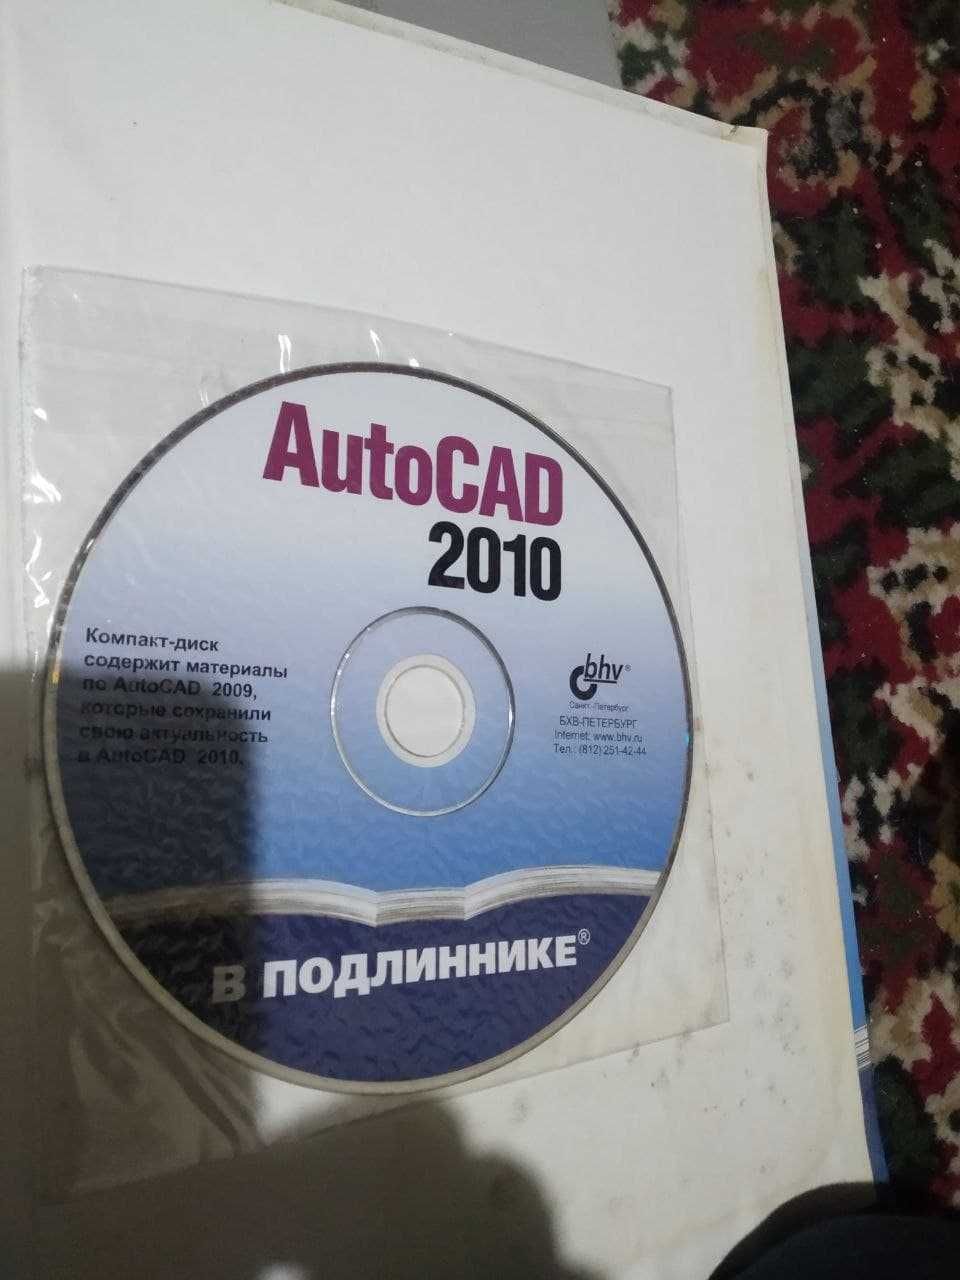 Книгa "Autocad 2010" с диском